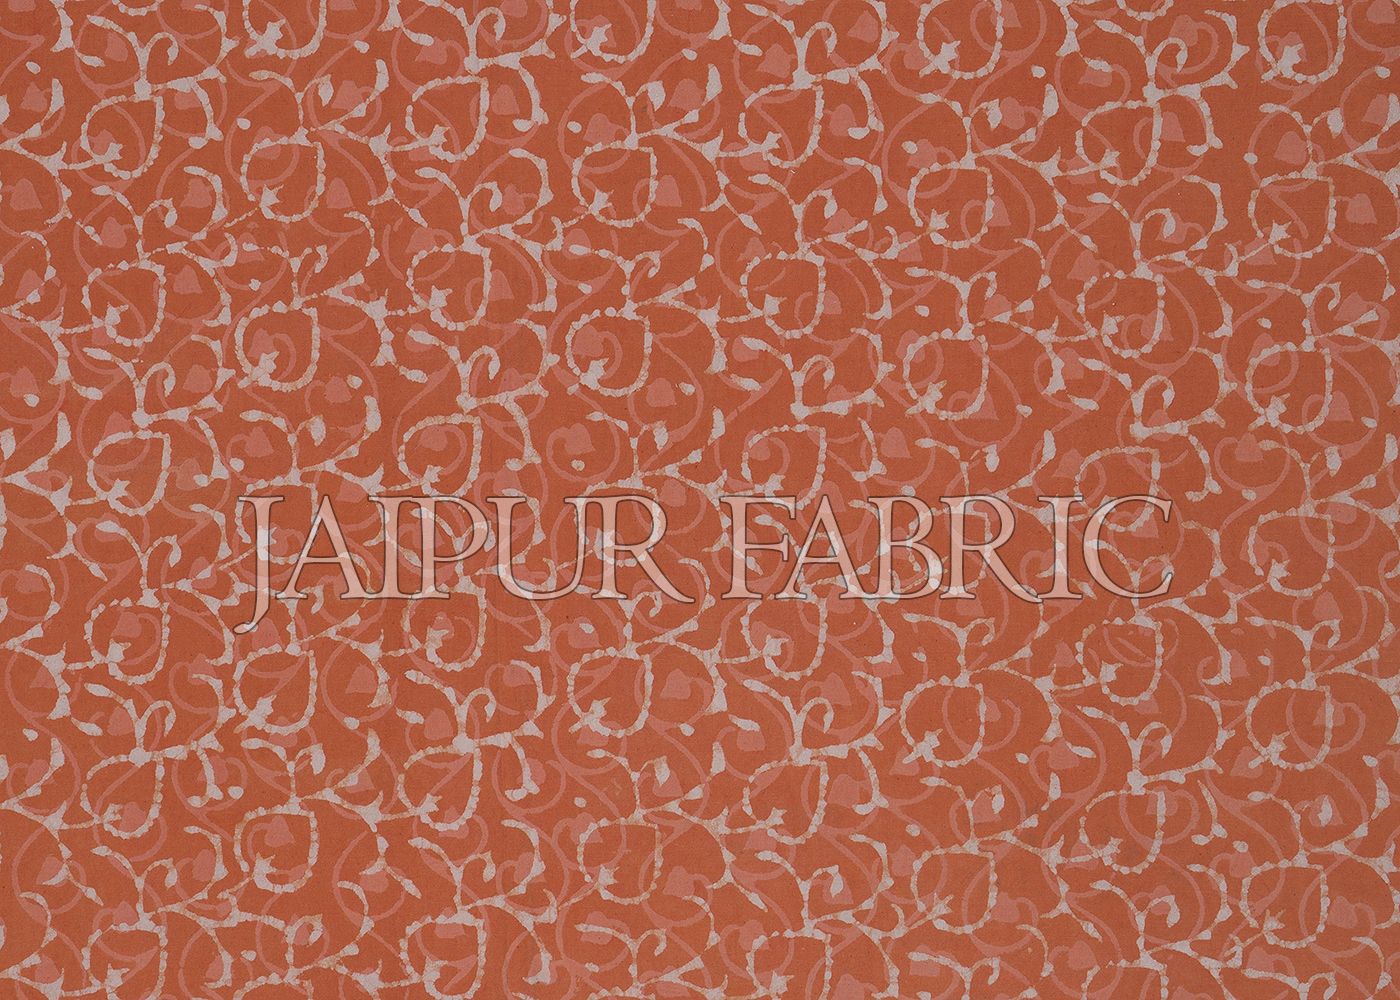 Orange Base Leaf Pattern Dhabu Print Cotton Double Bed Sheet